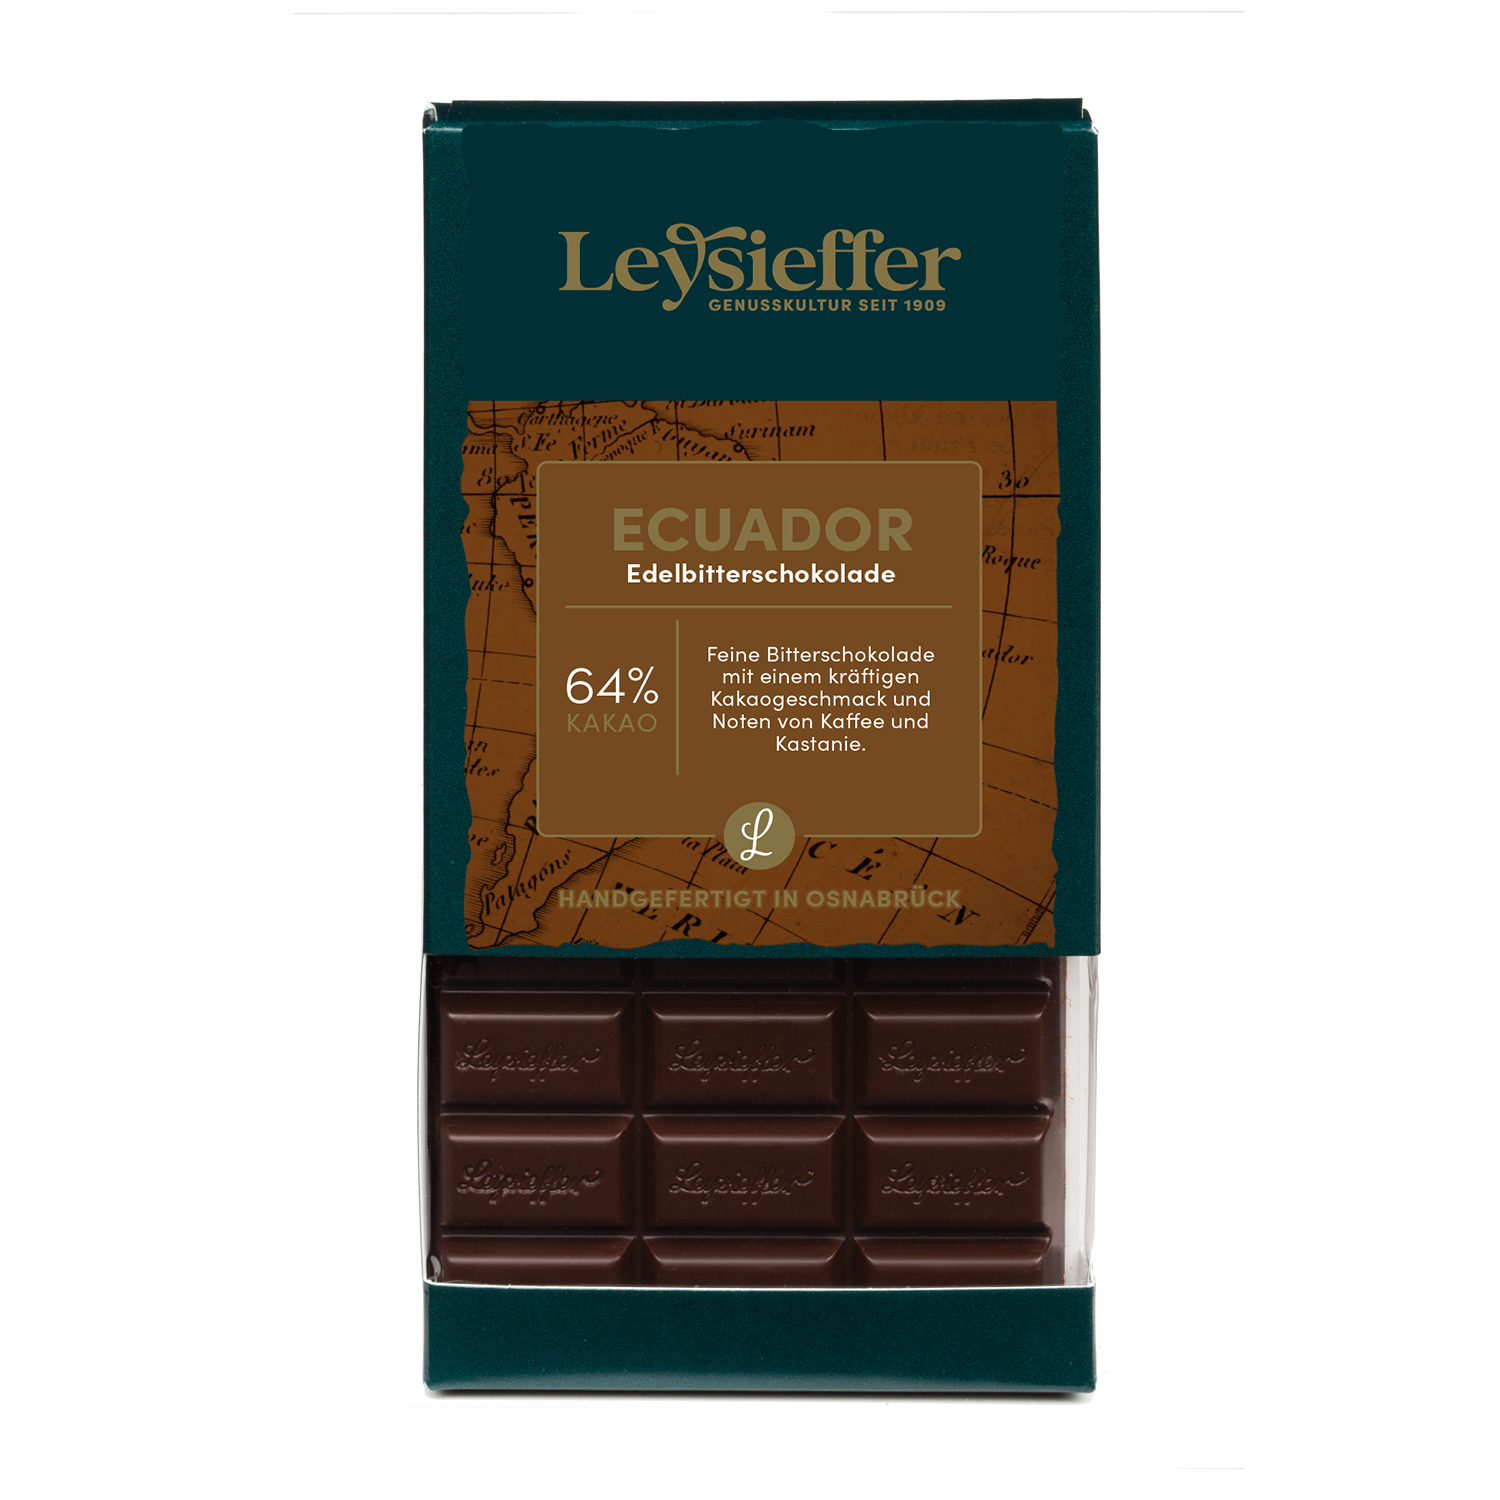 ECUADOR ,,Edelbitterschokolade 64 % Kakao